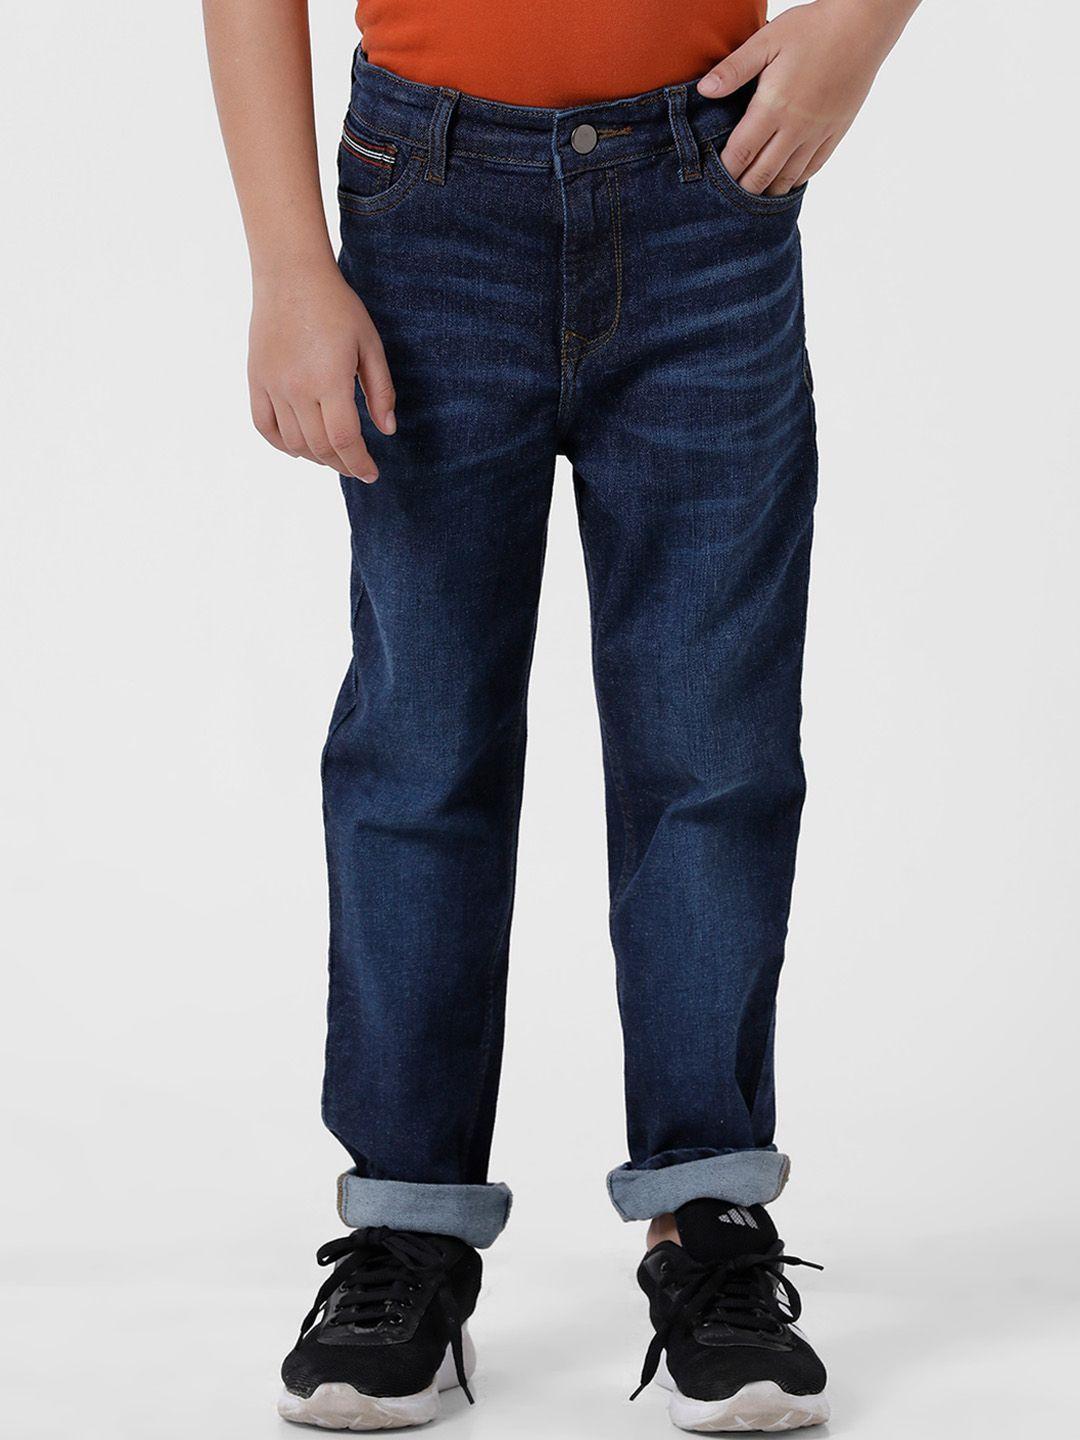 kate & oscar boys comfort fit low distress light fade casual regular cotton jeans